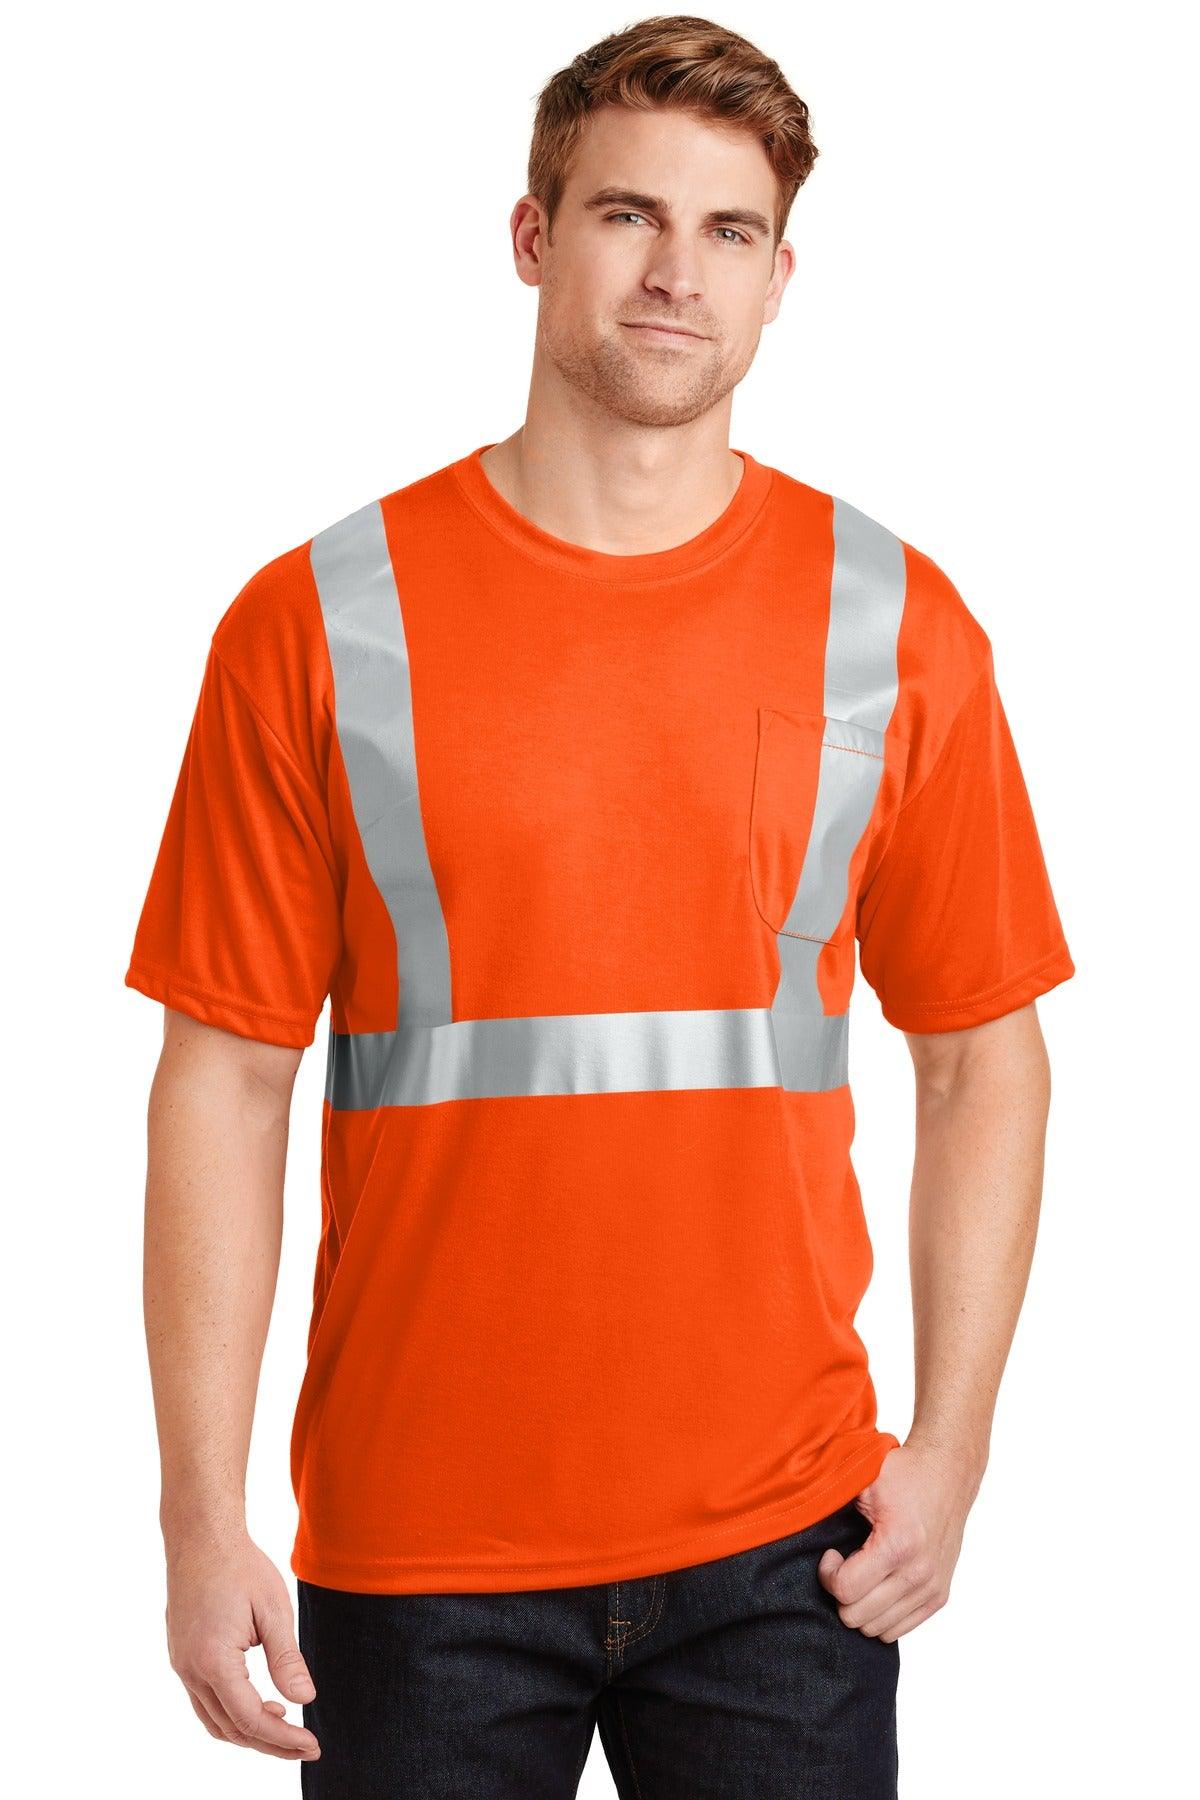 CornerStone - ANSI 107 Class 2 Safety T-Shirt. CS401 - Dresses Max